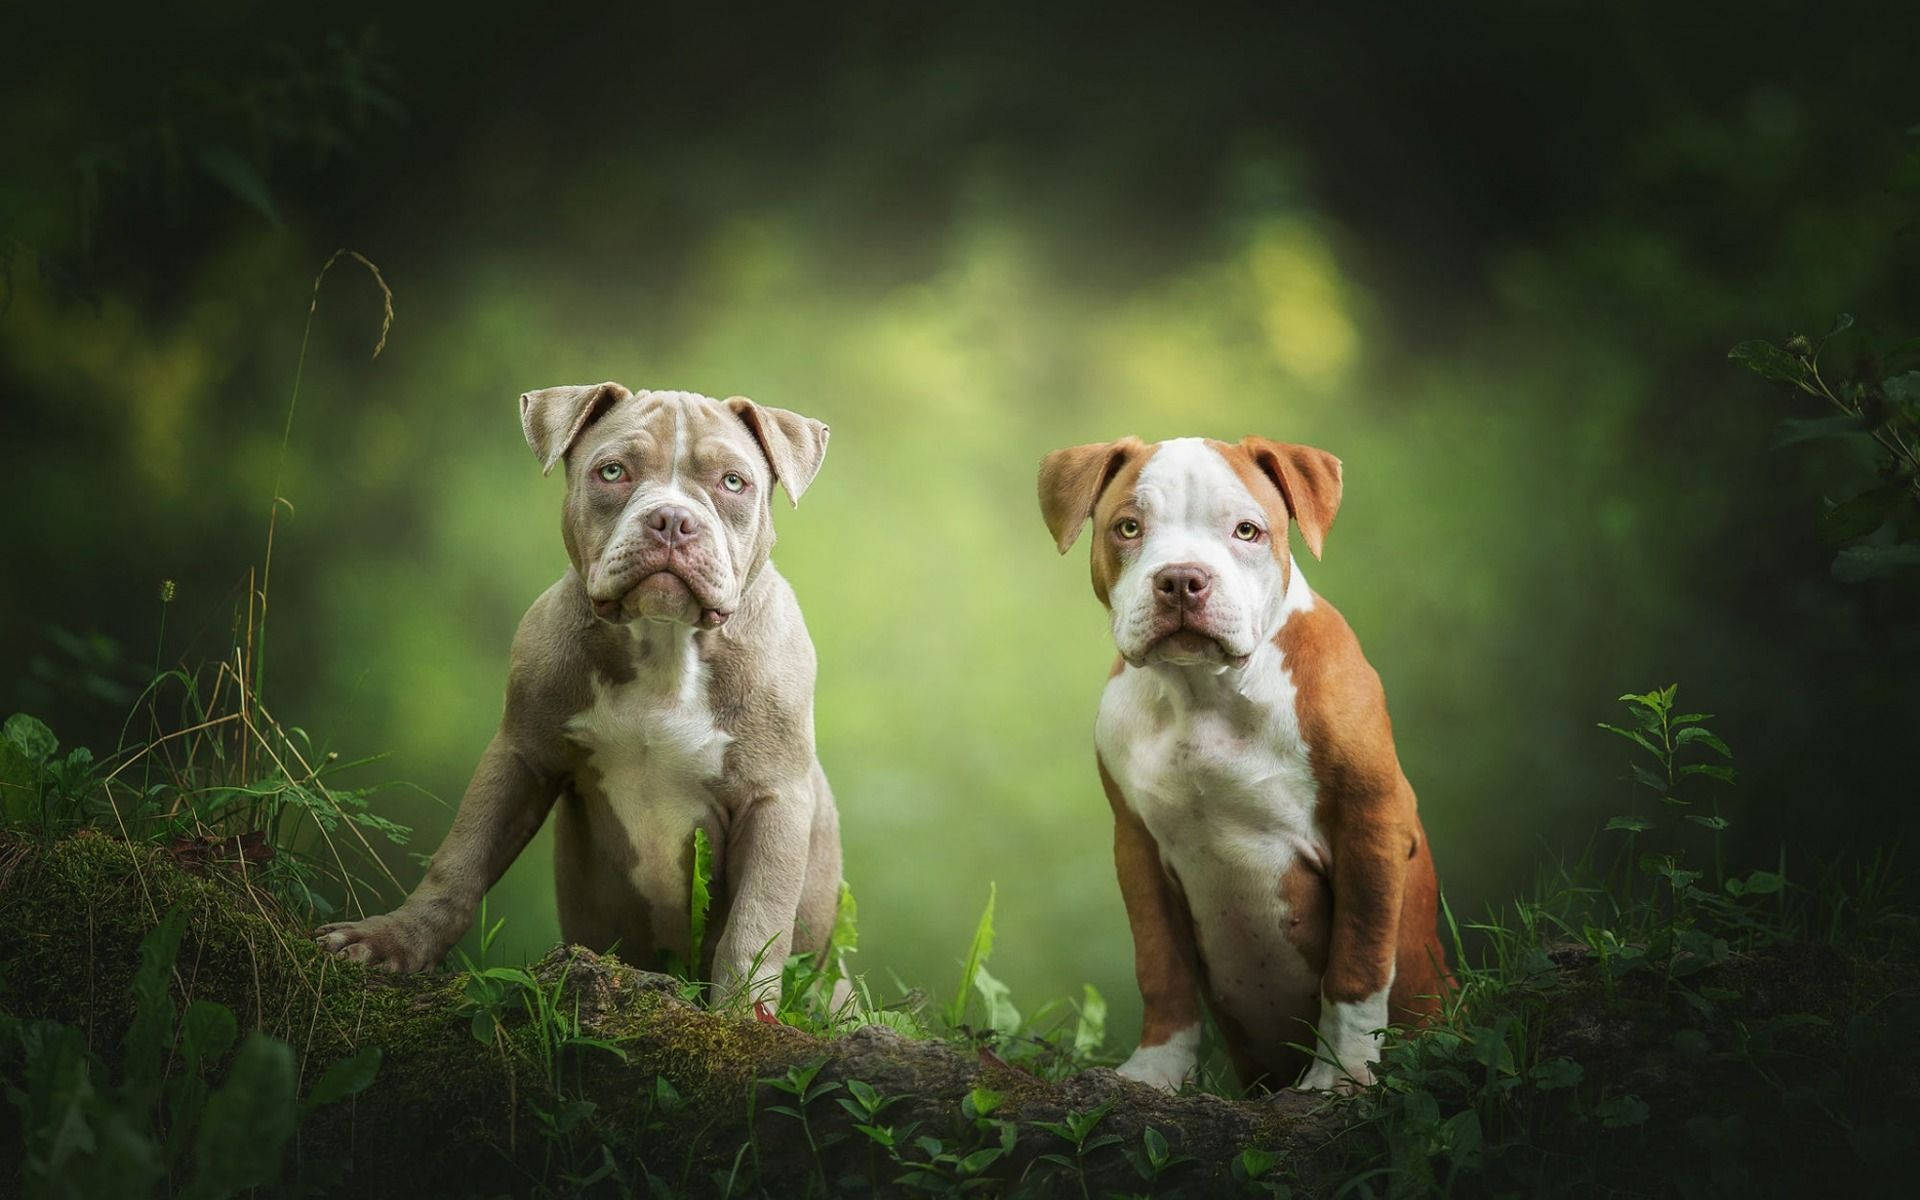 Pitbull Puppies On Grassy Ground